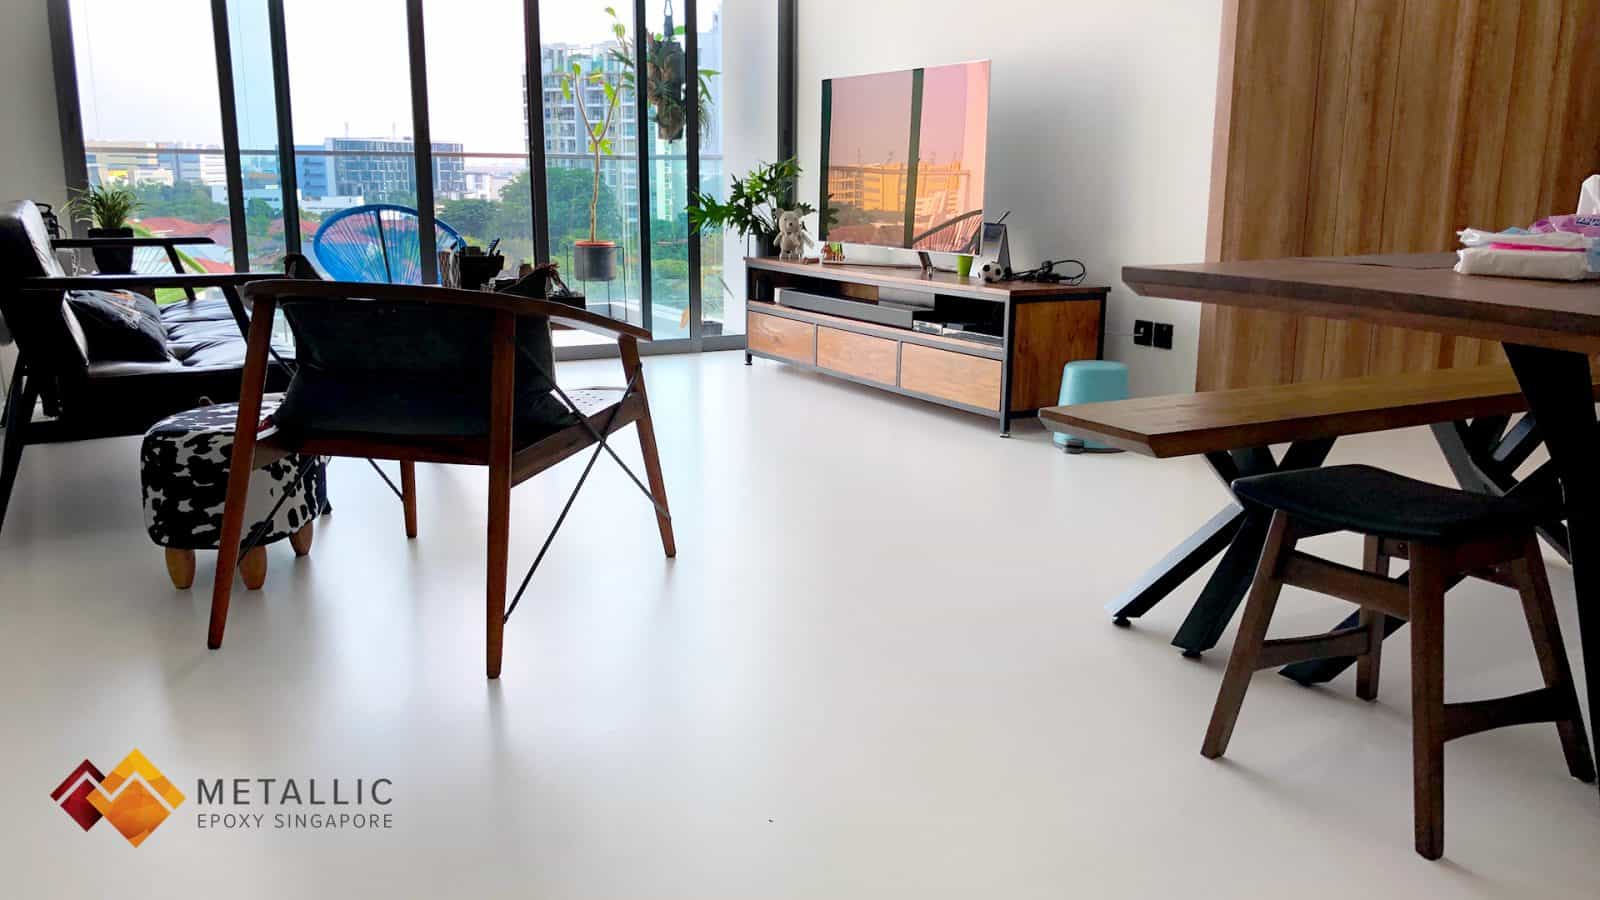 metallic epoxy singapore marble theme floor coated living room